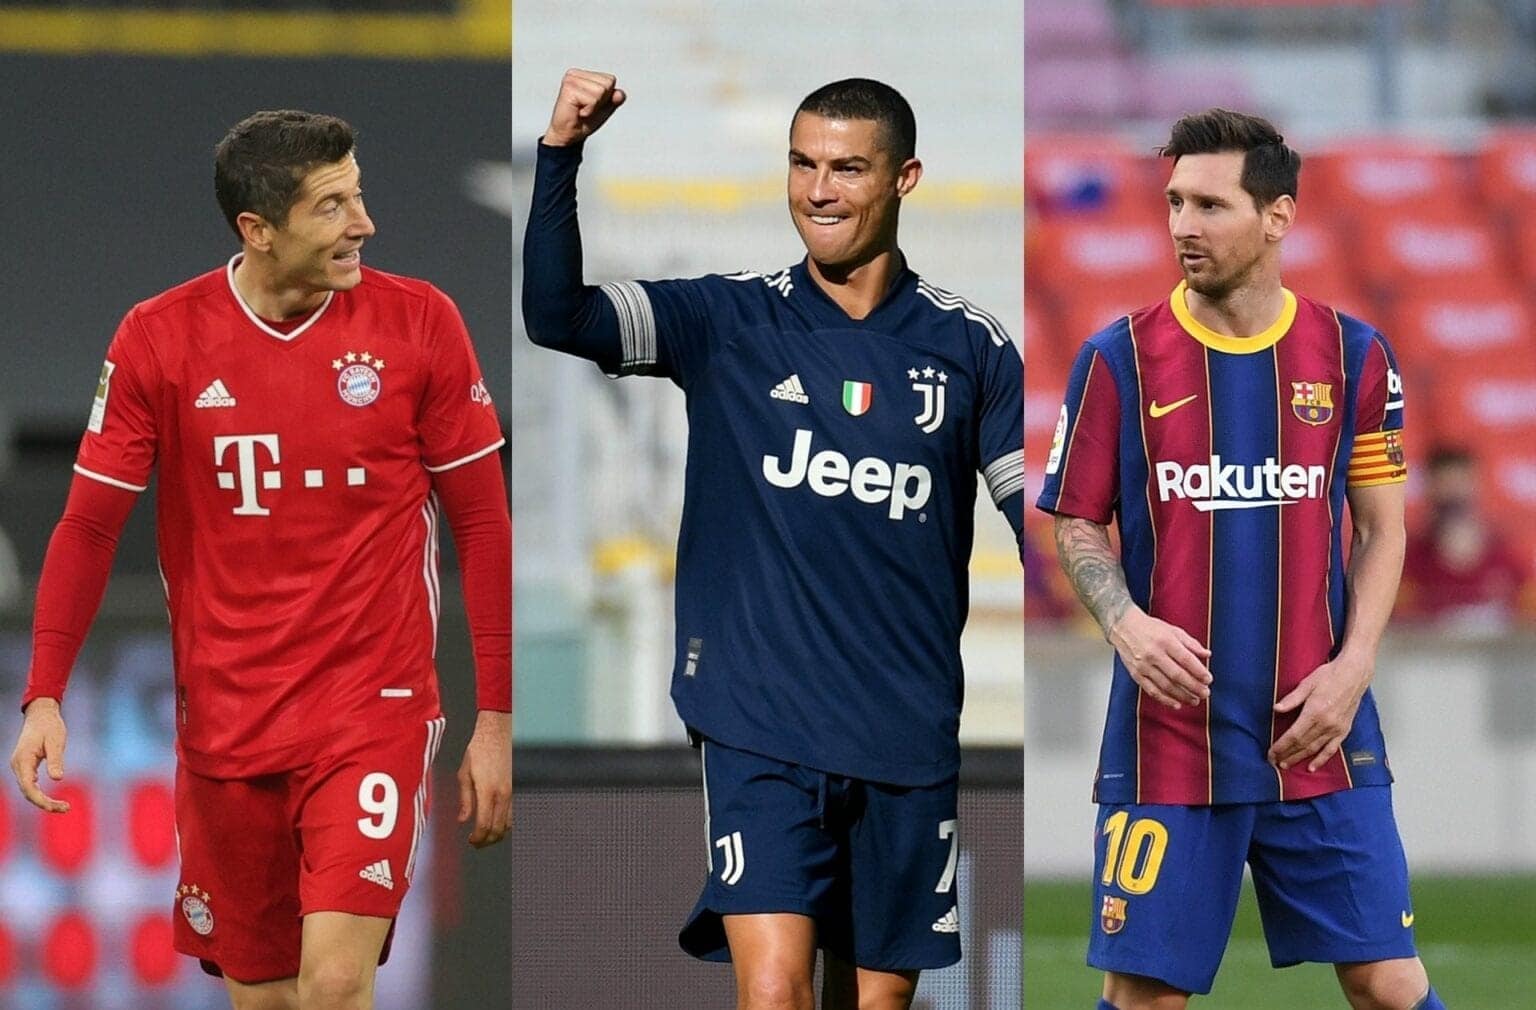 Ronaldo Emerges The Leading Goalscorer In Europe